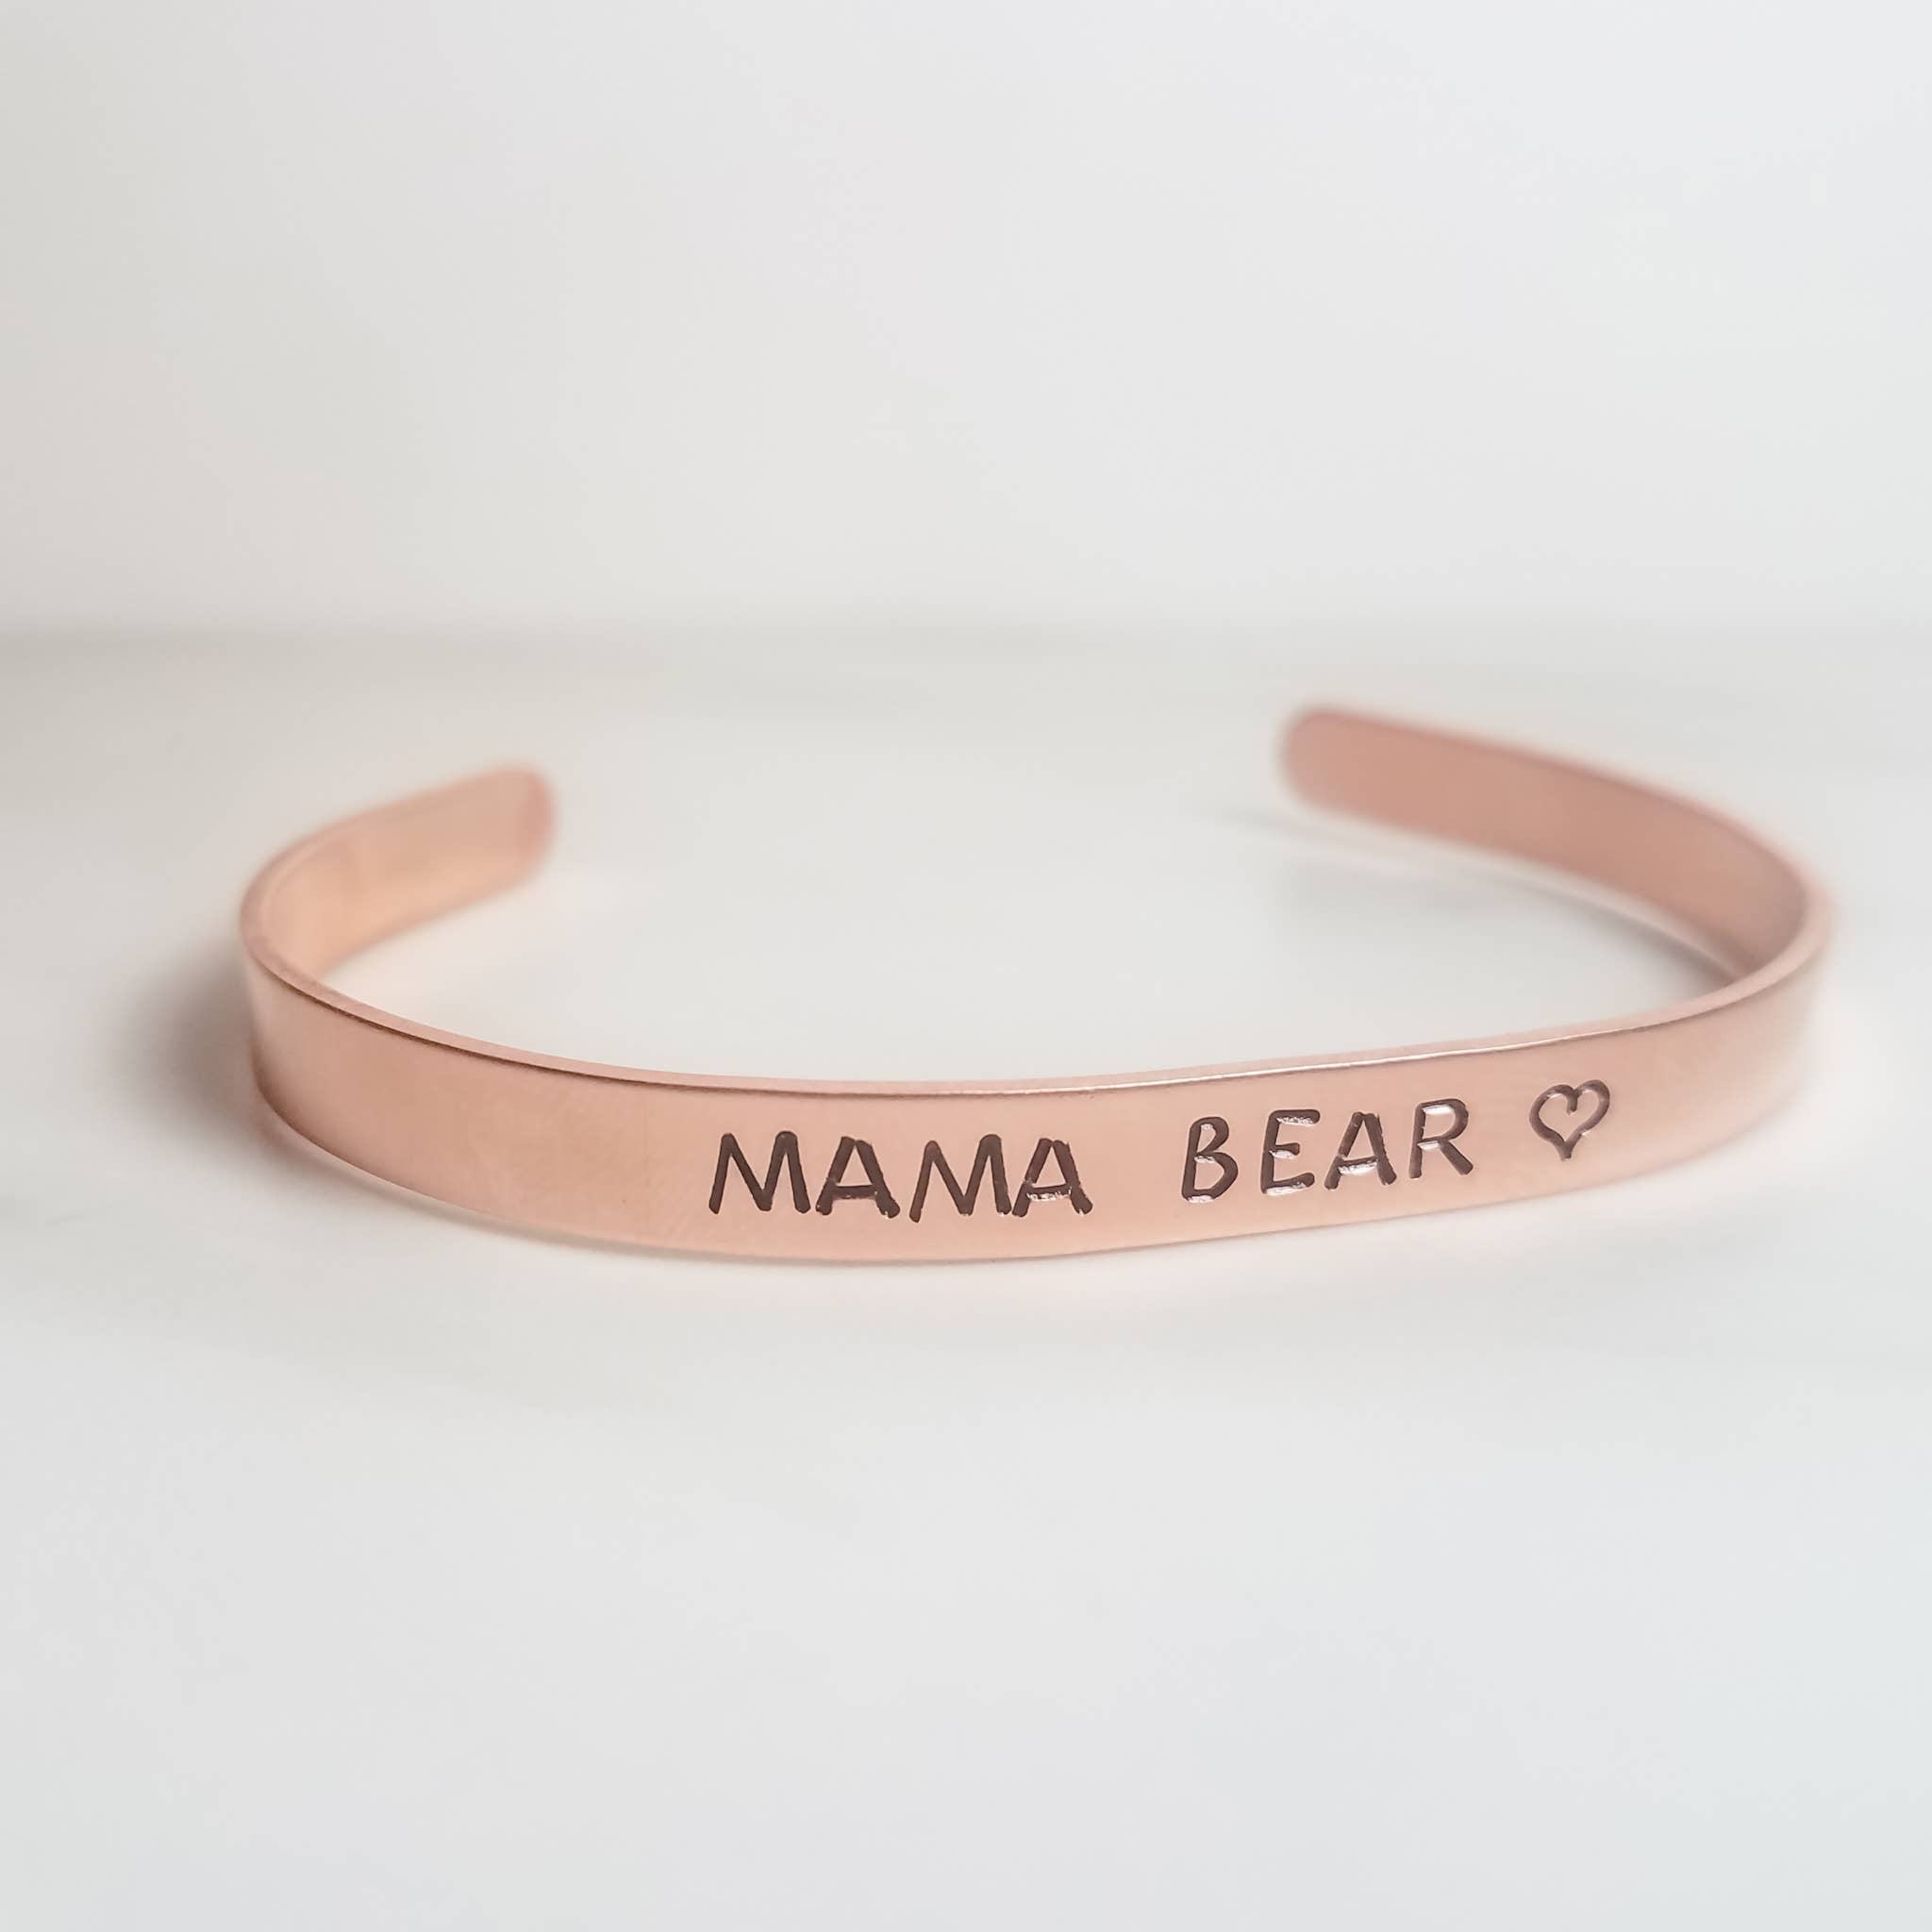 MKayAccessories - Mama Bear Bracelet, cuff bracelet, inspirational bracelet